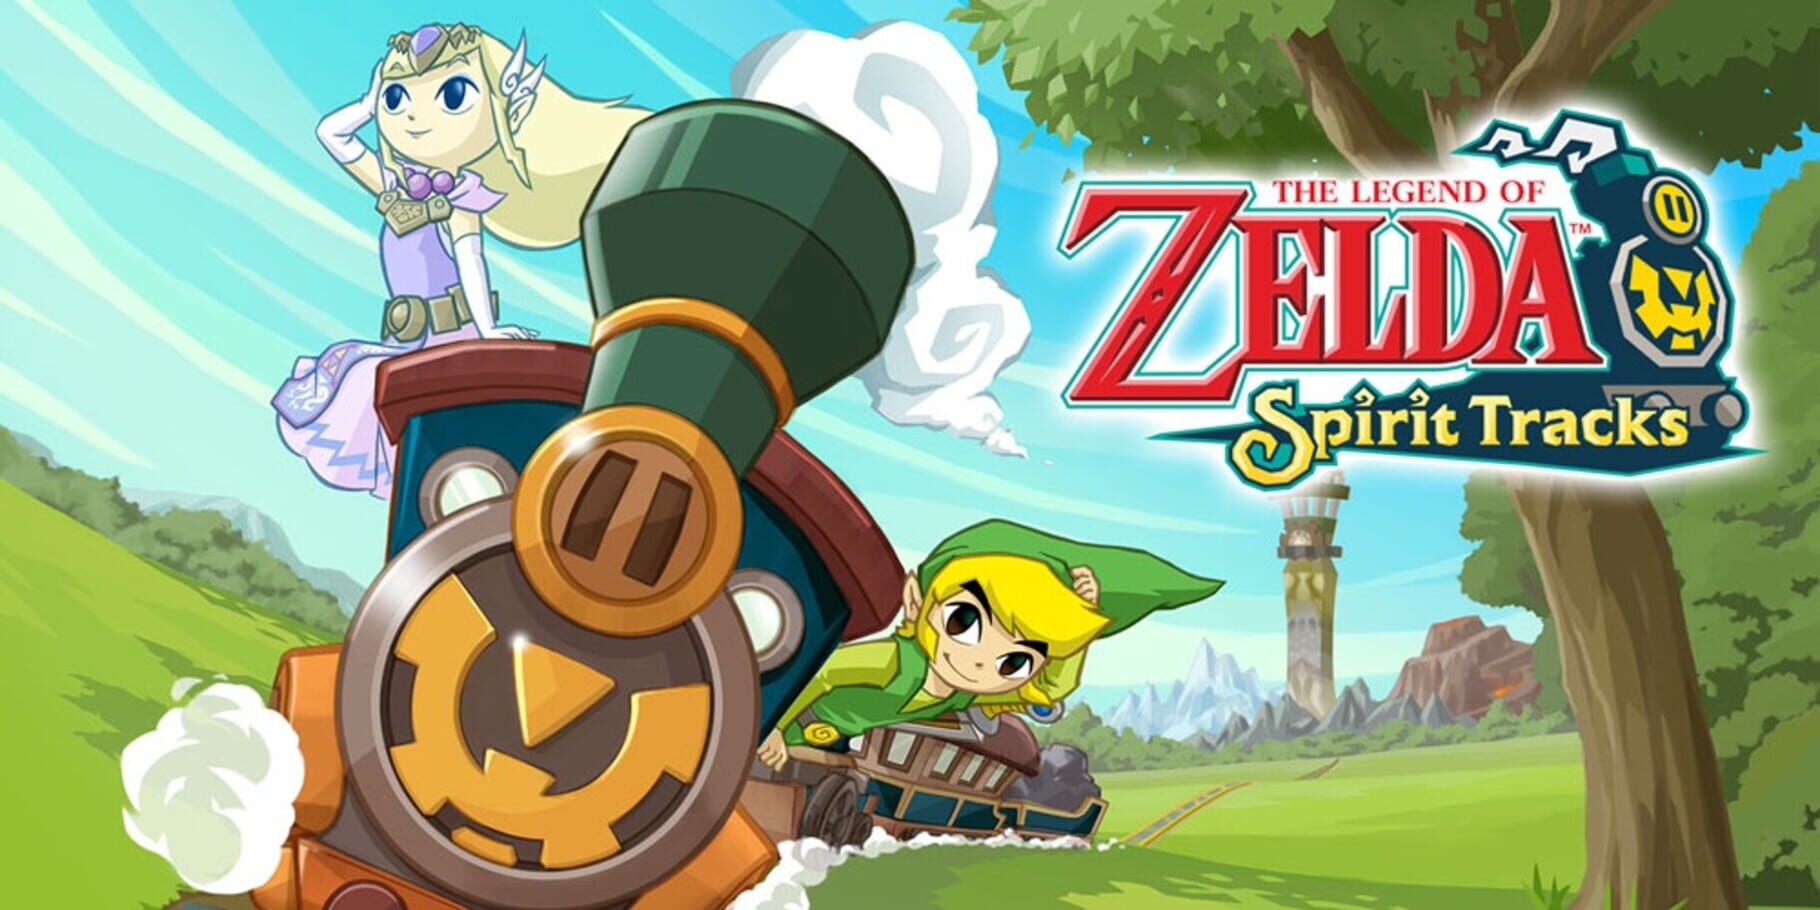 Arte - The Legend of Zelda: Spirit Tracks